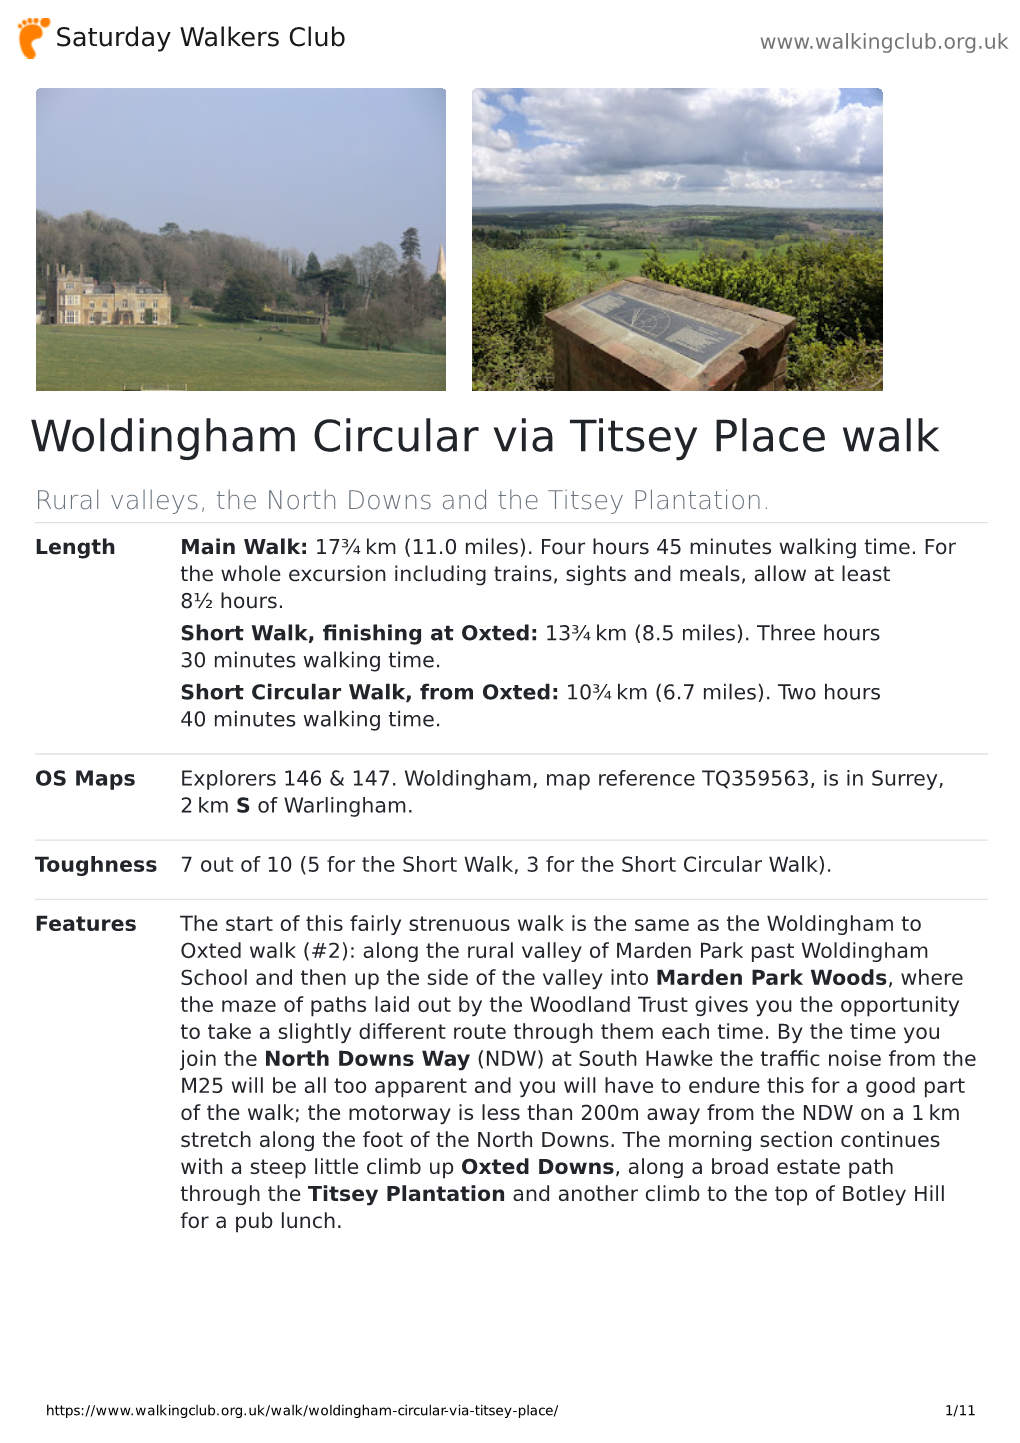 Woldingham Circular Via Titsey Place Walk